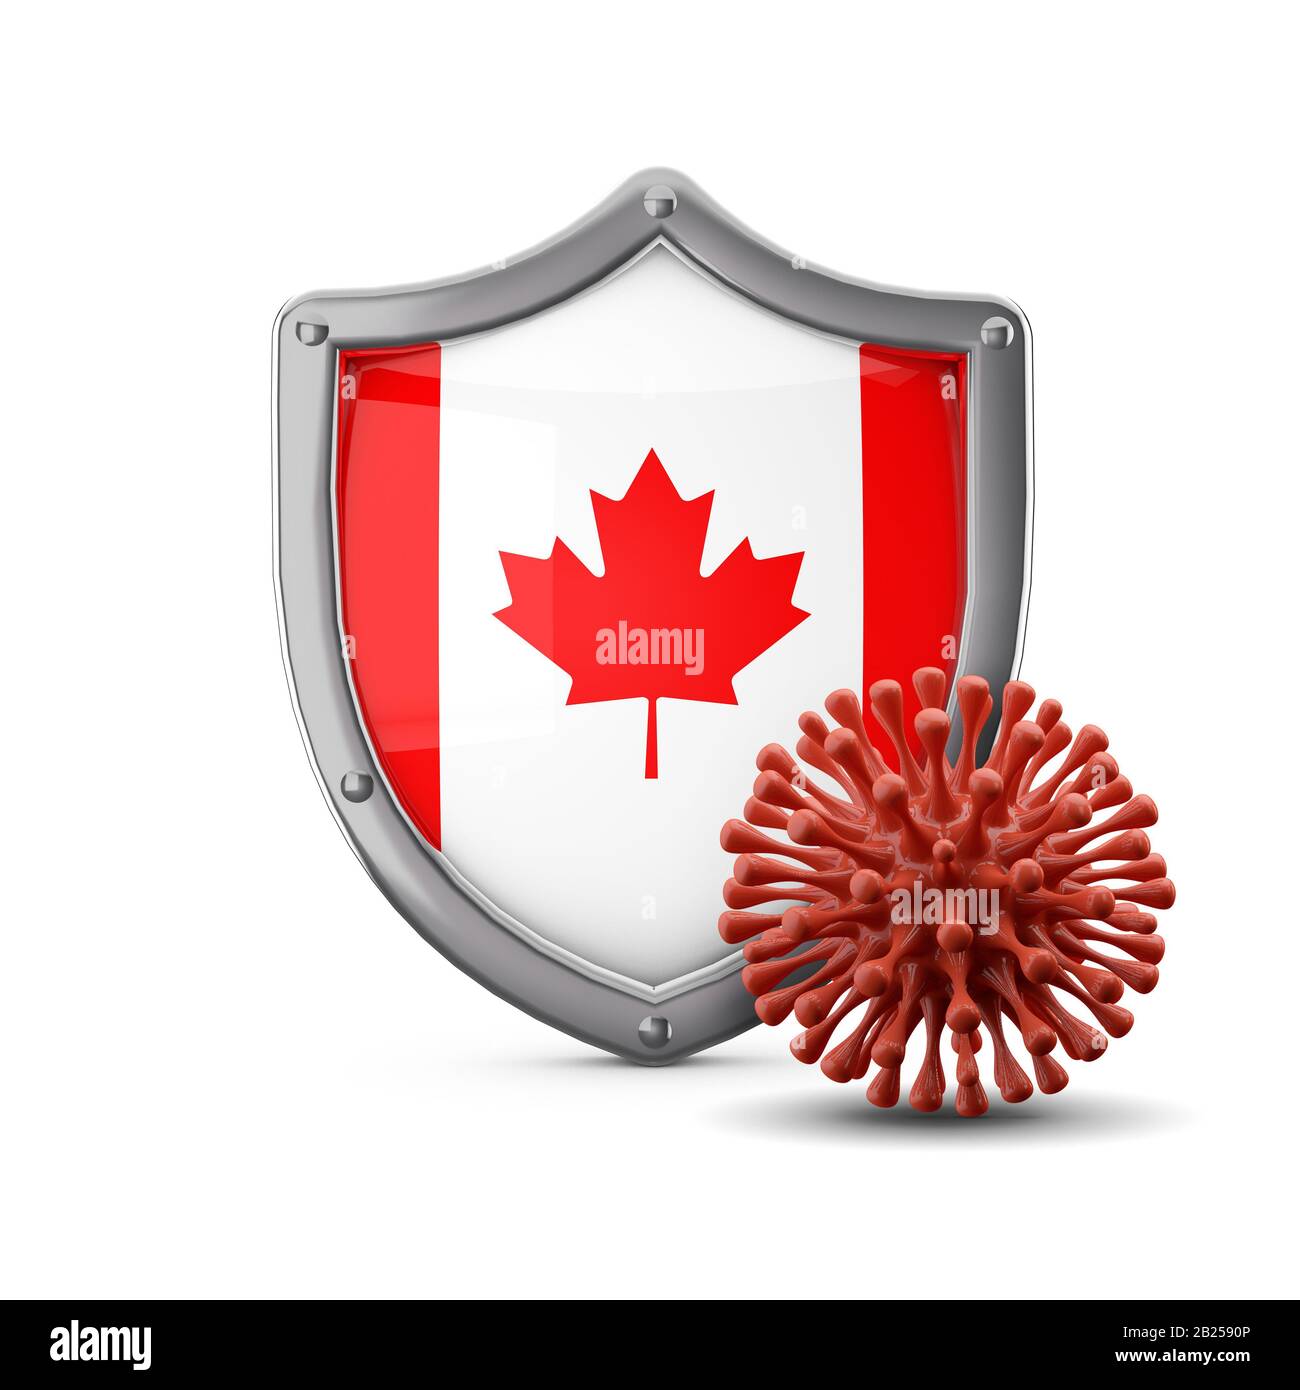 canadian shield map kids